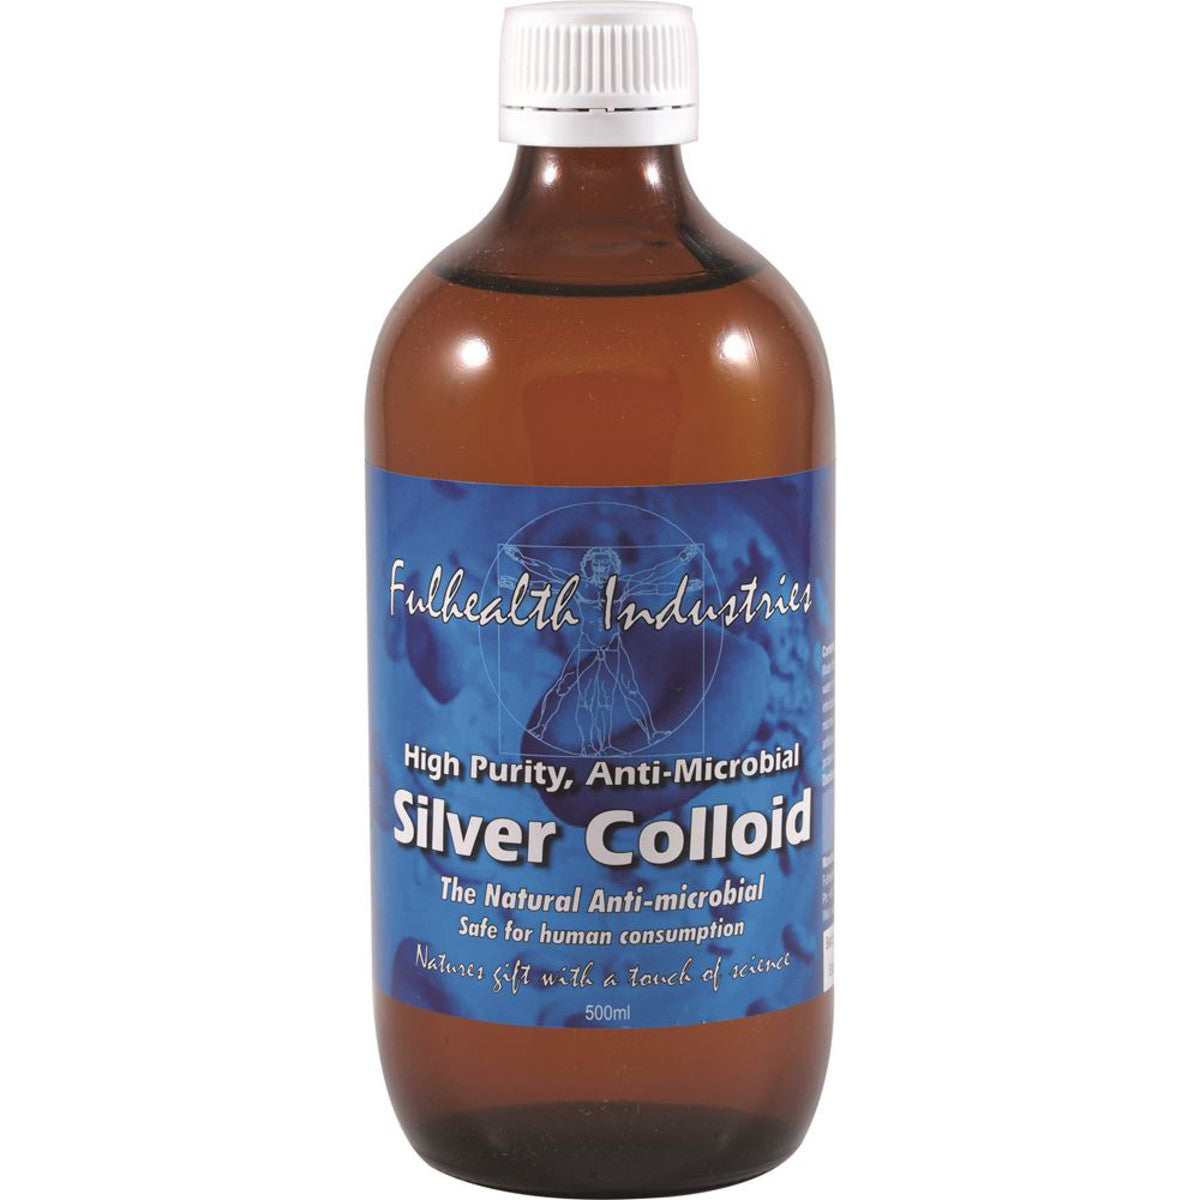 Fulhealth Industries - Silver Colloid